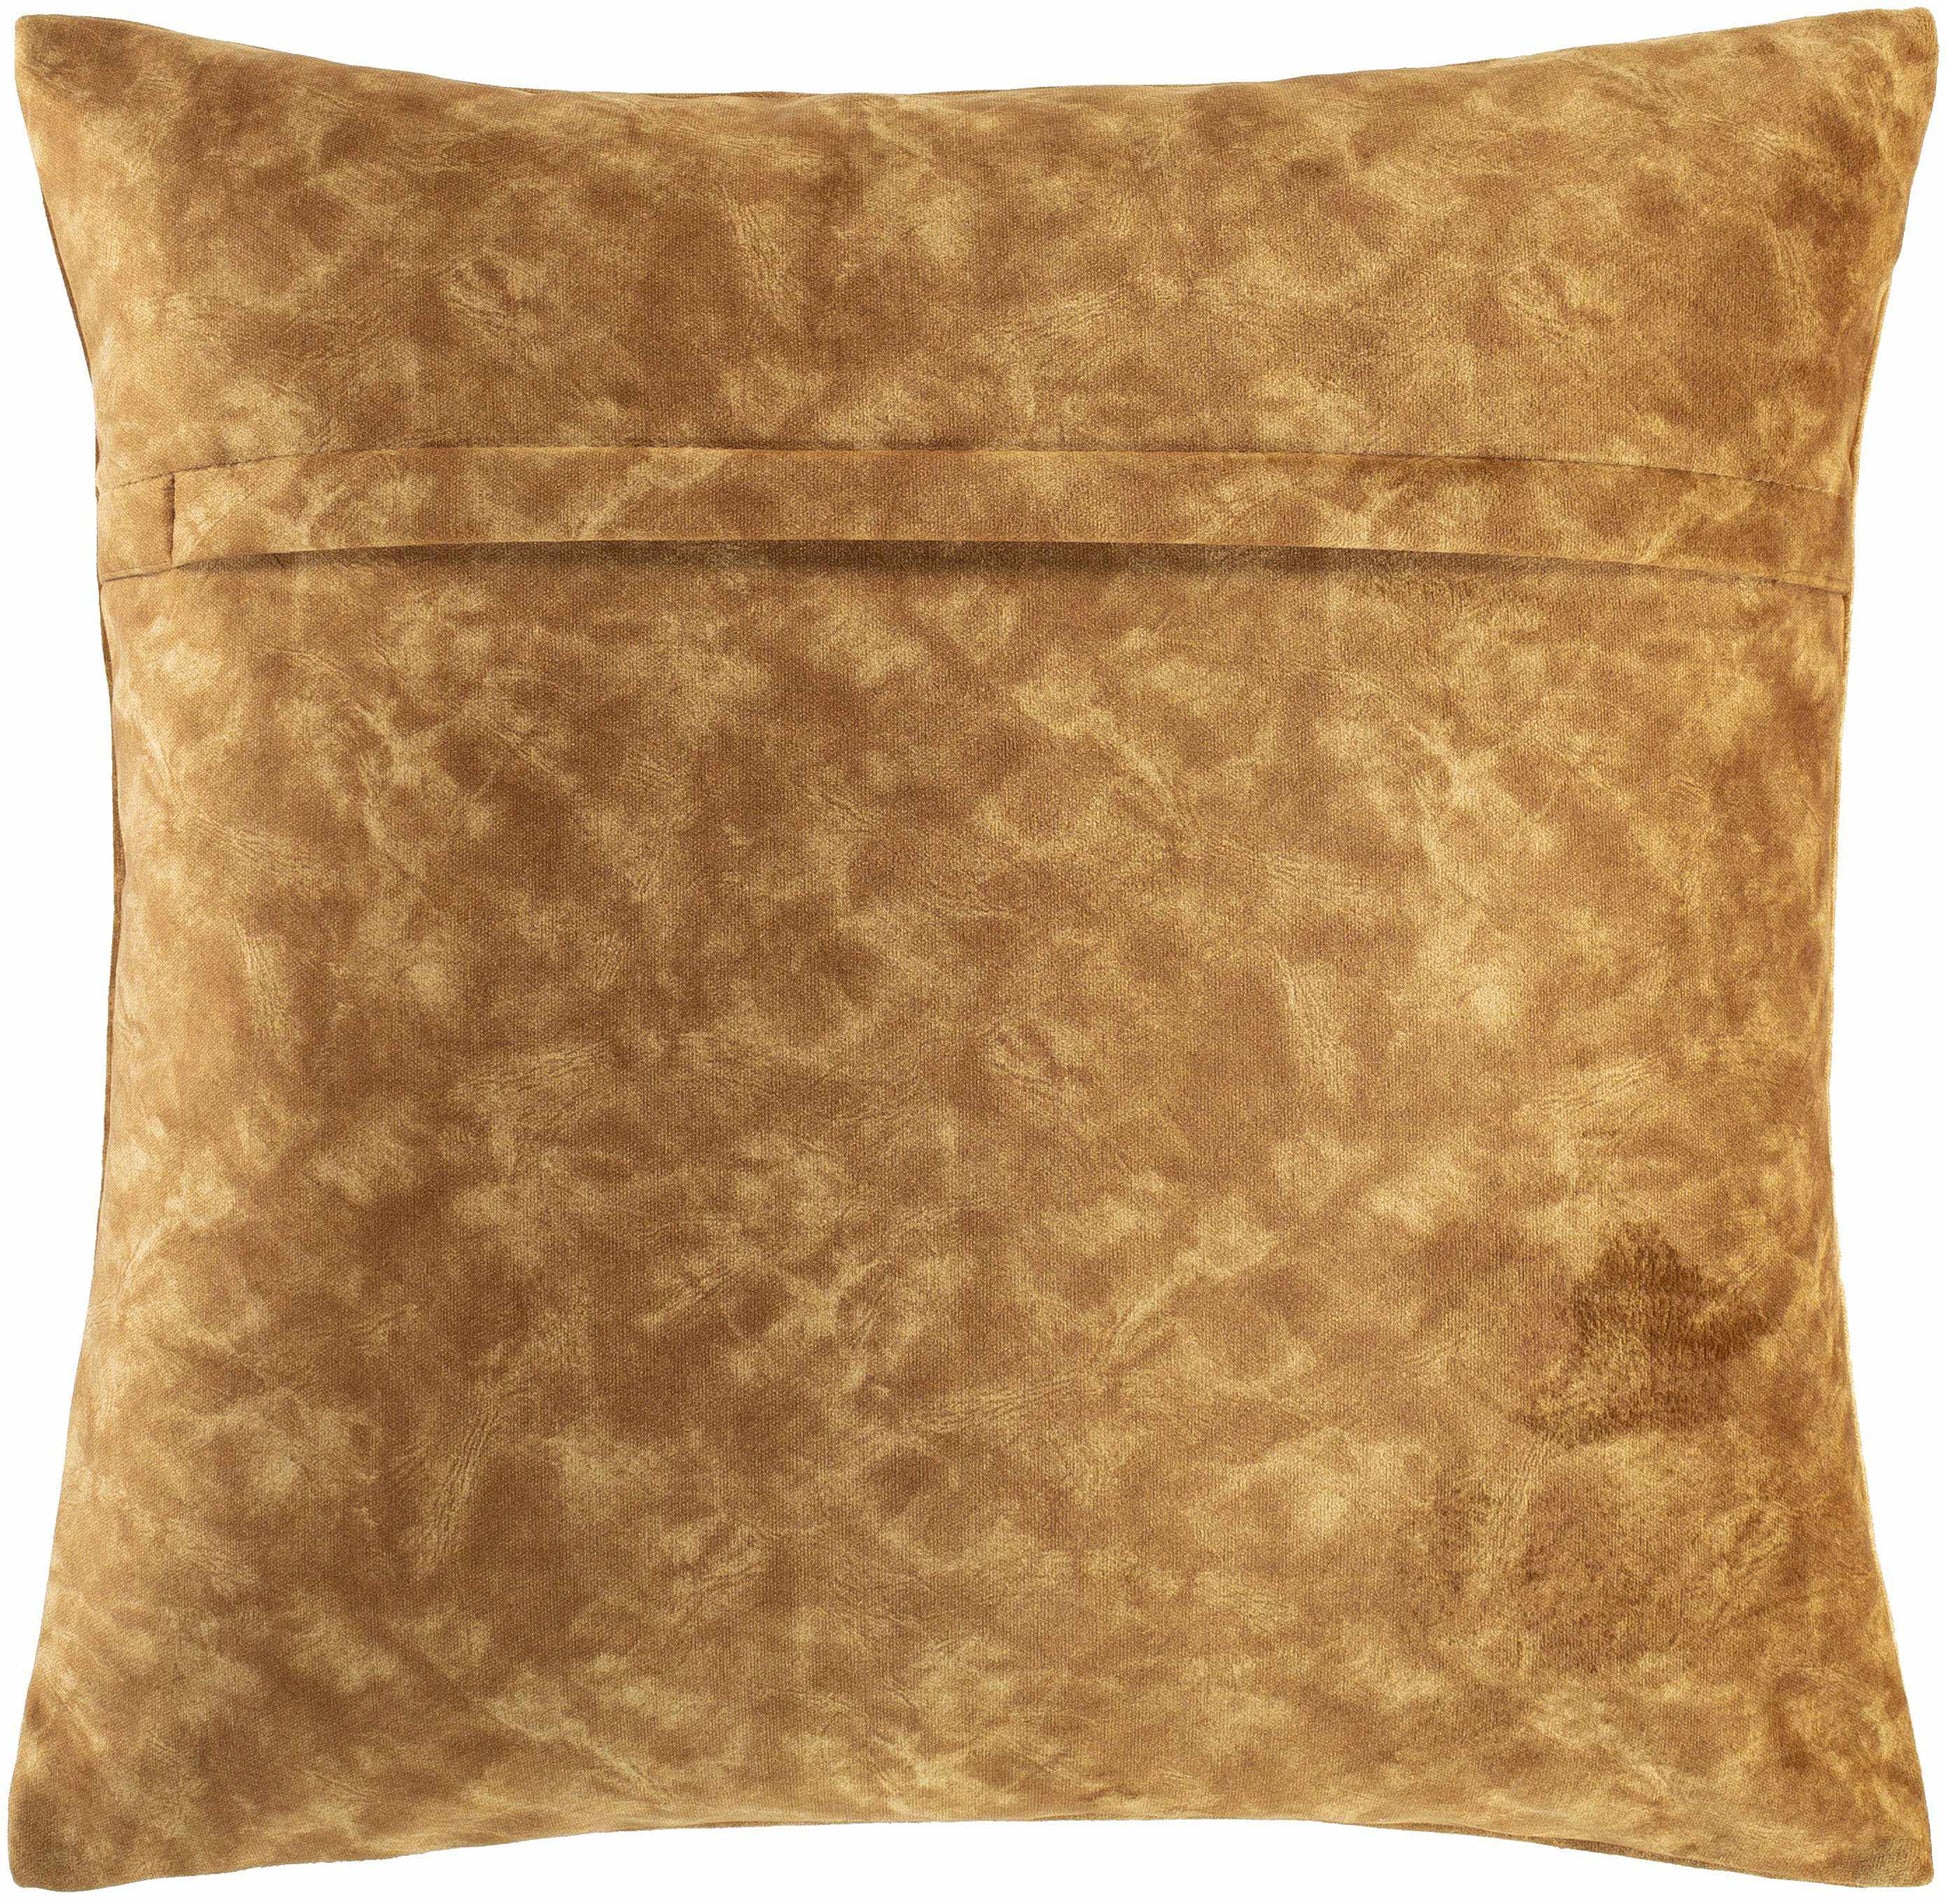 Kijfhoek Tan Pillow Cover